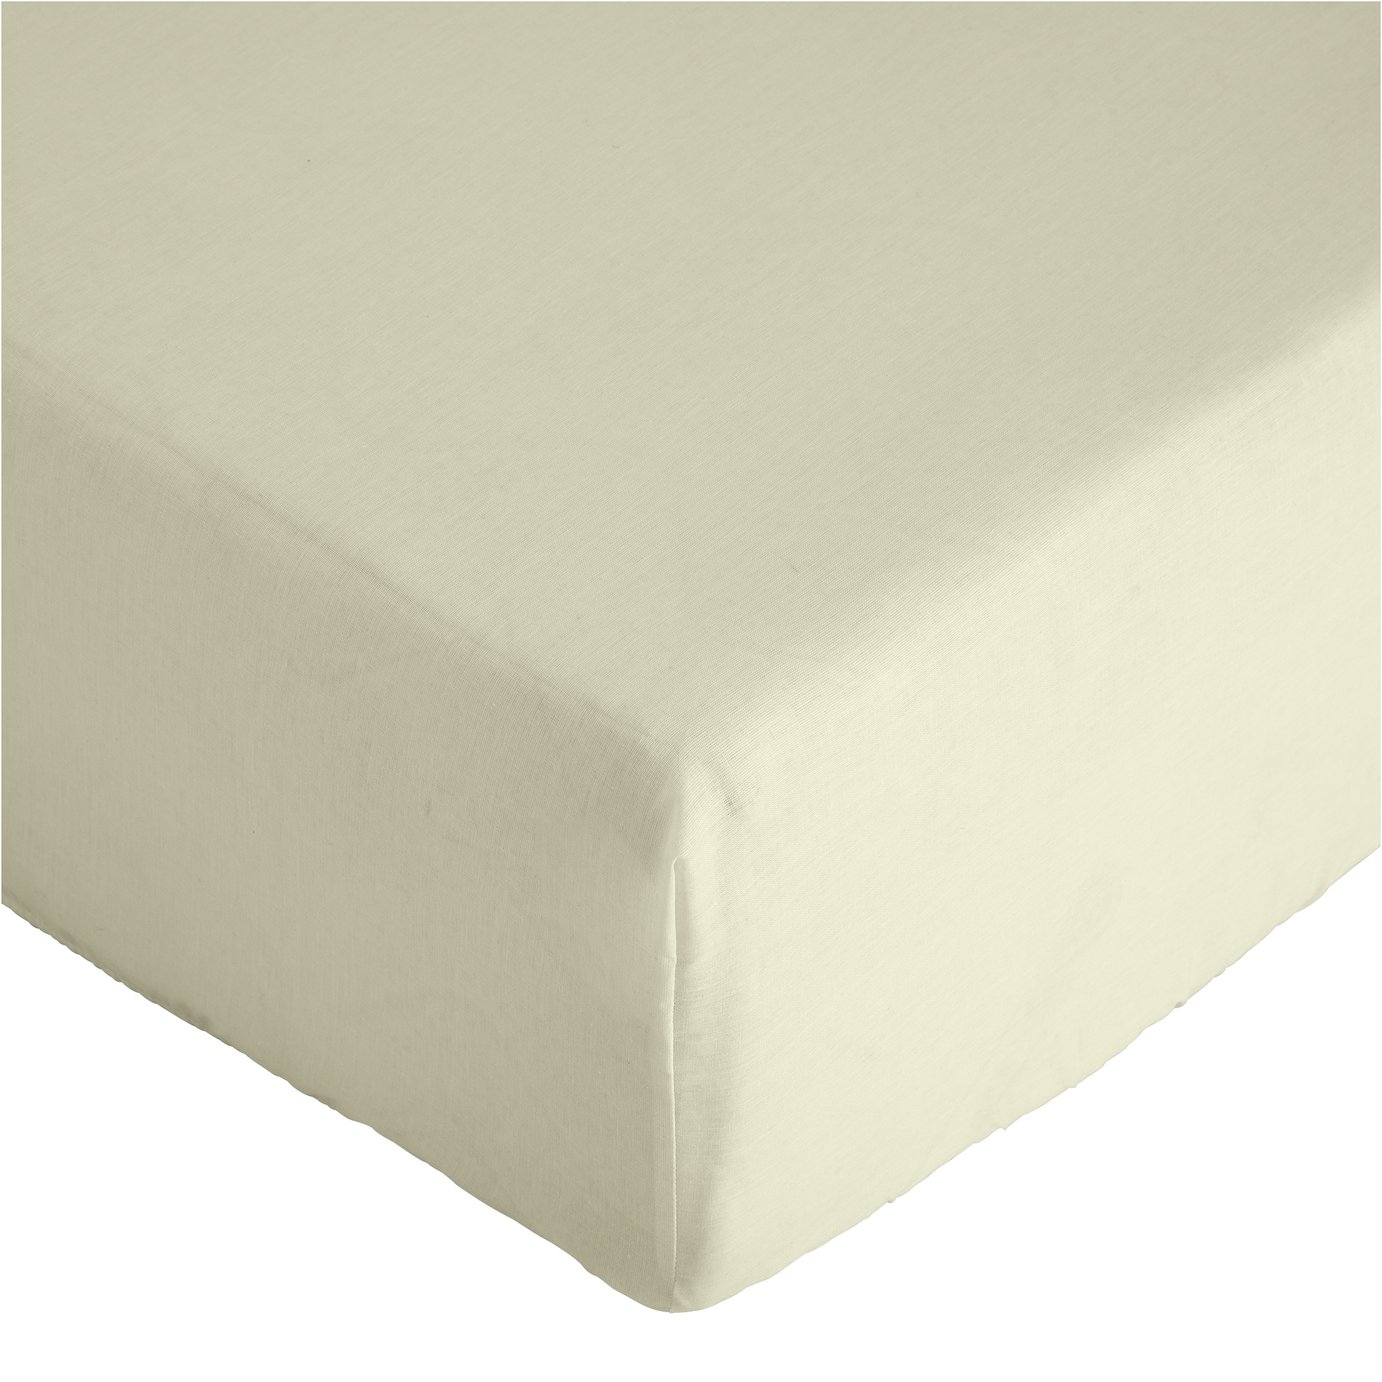 Argos Home Plain Cream Fitted Sheet - Superking